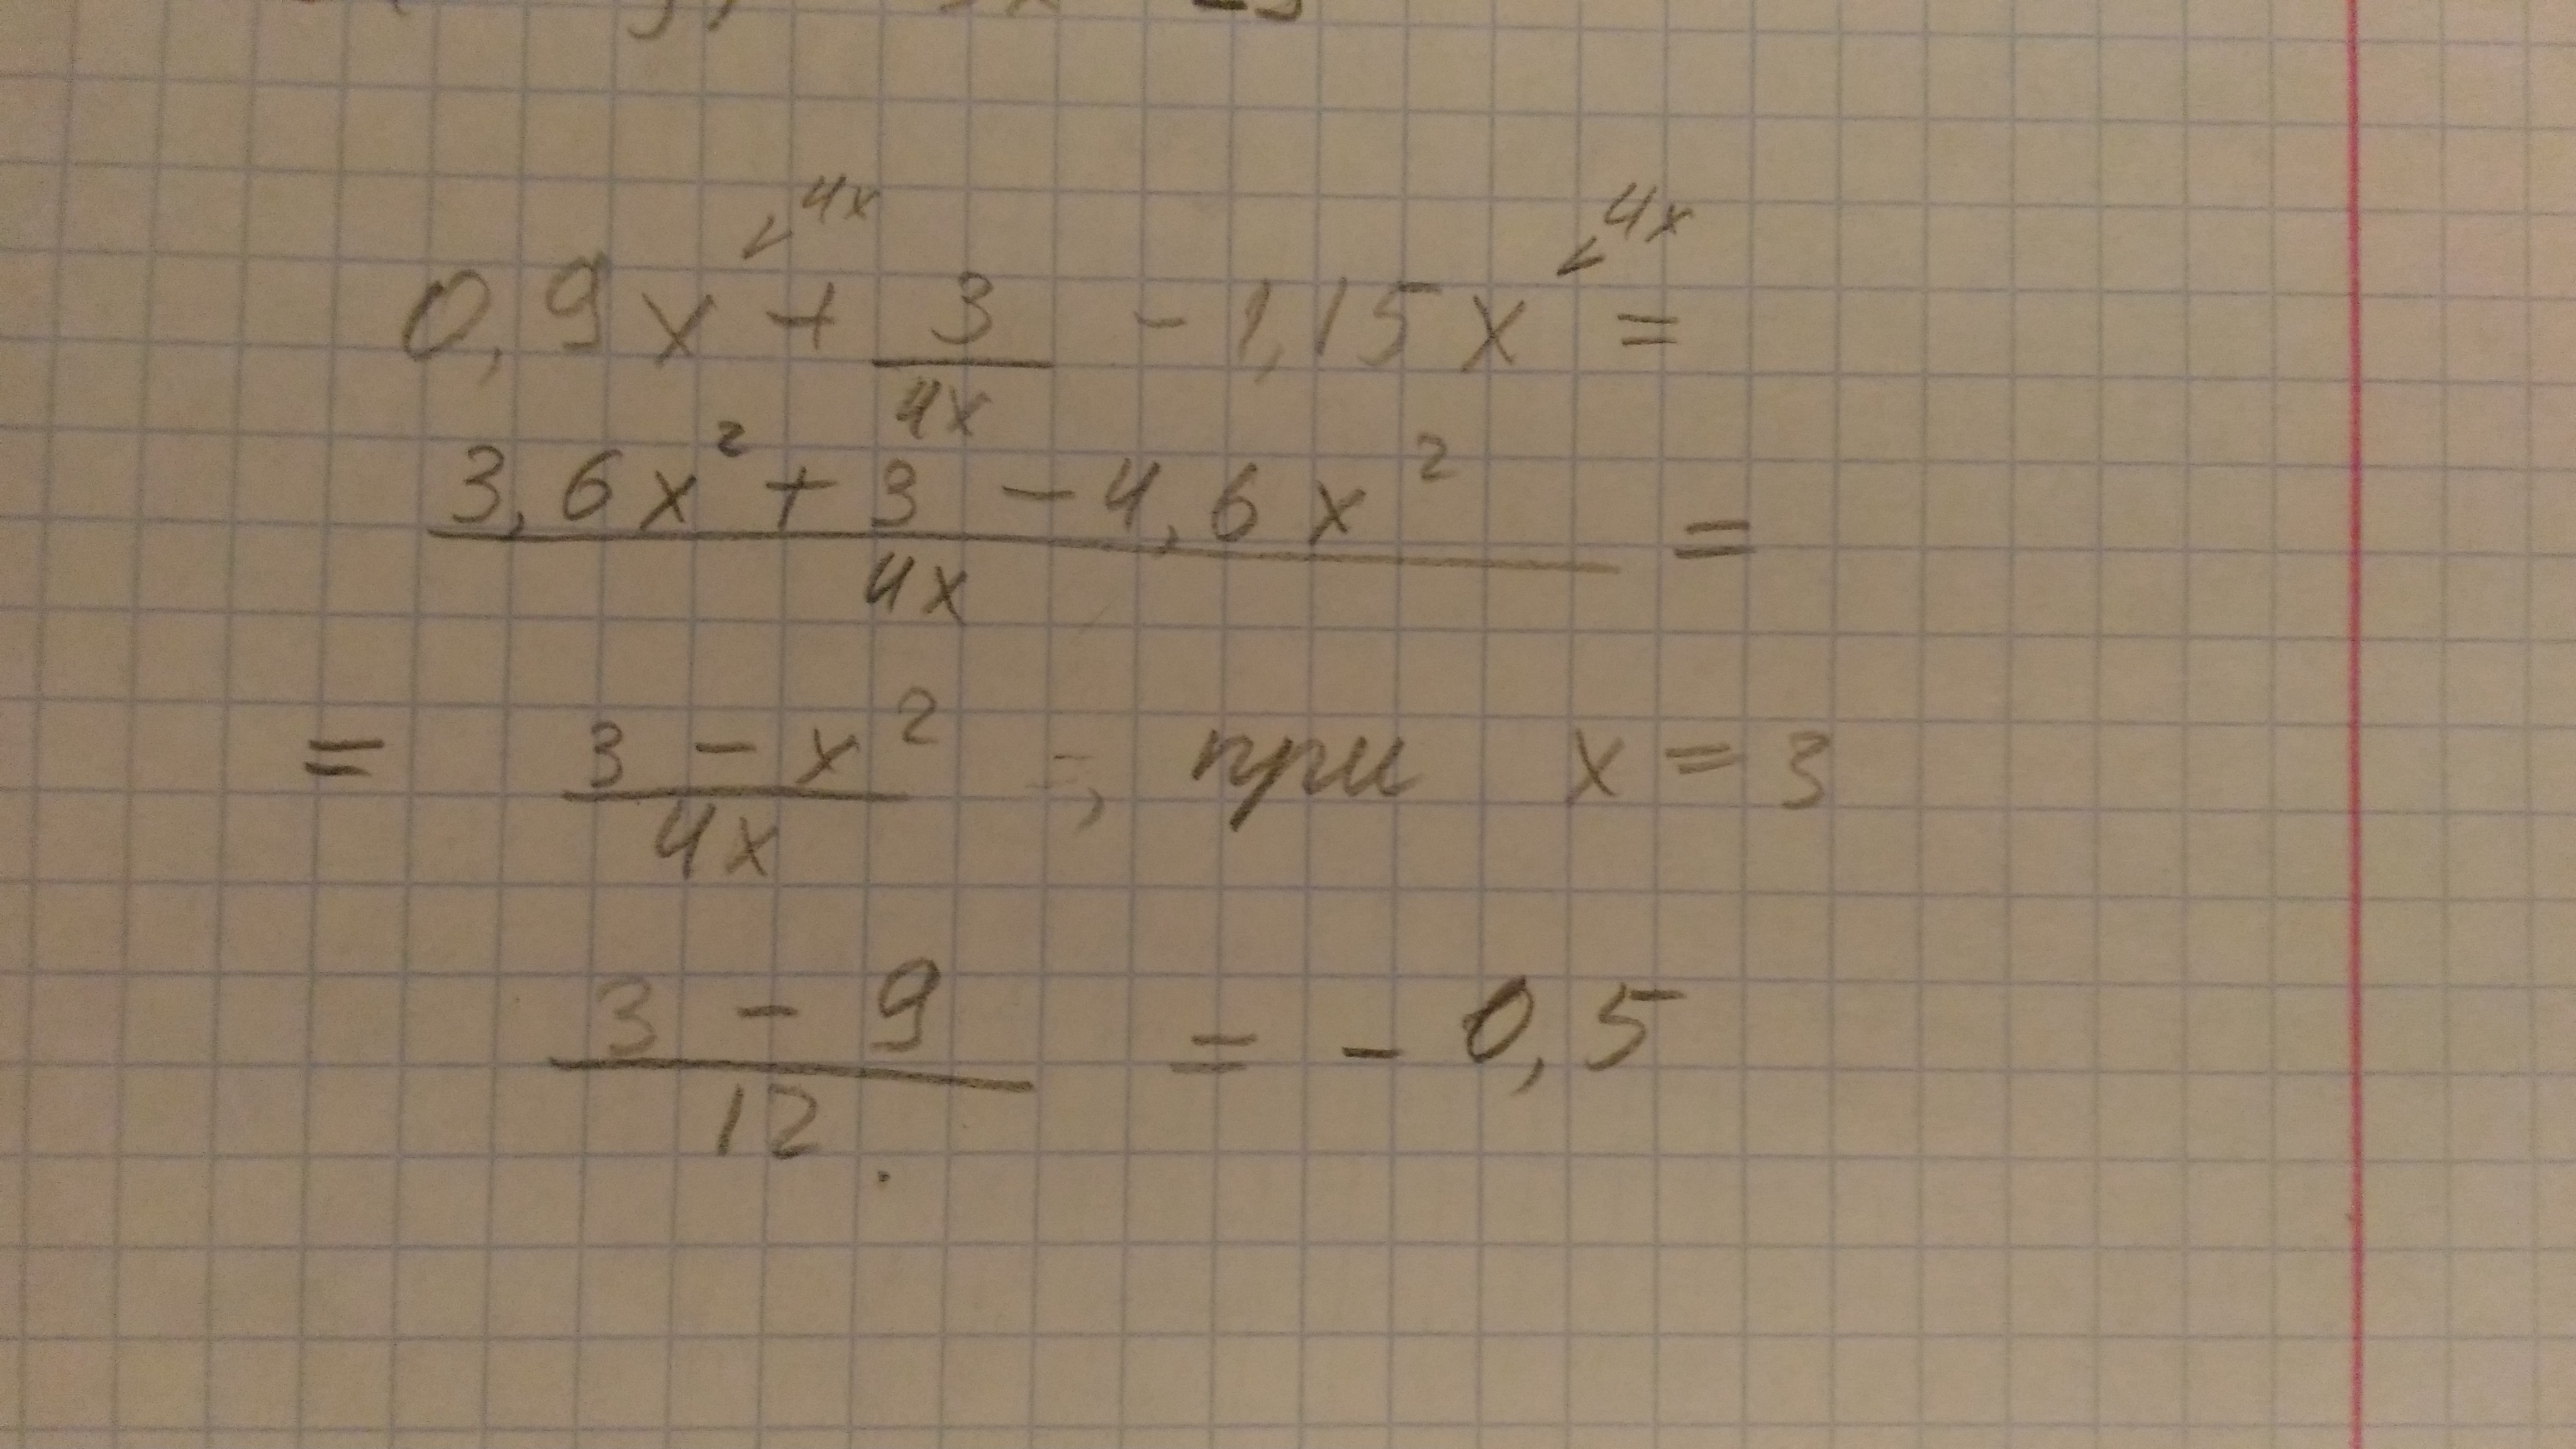 2x 9 3x при x 3. |-4|+|1-3x| при x. [3x-3]-4x при x= -2. 4 4 5 X X      при x  3. 3x-|4x+15| при x=-8.